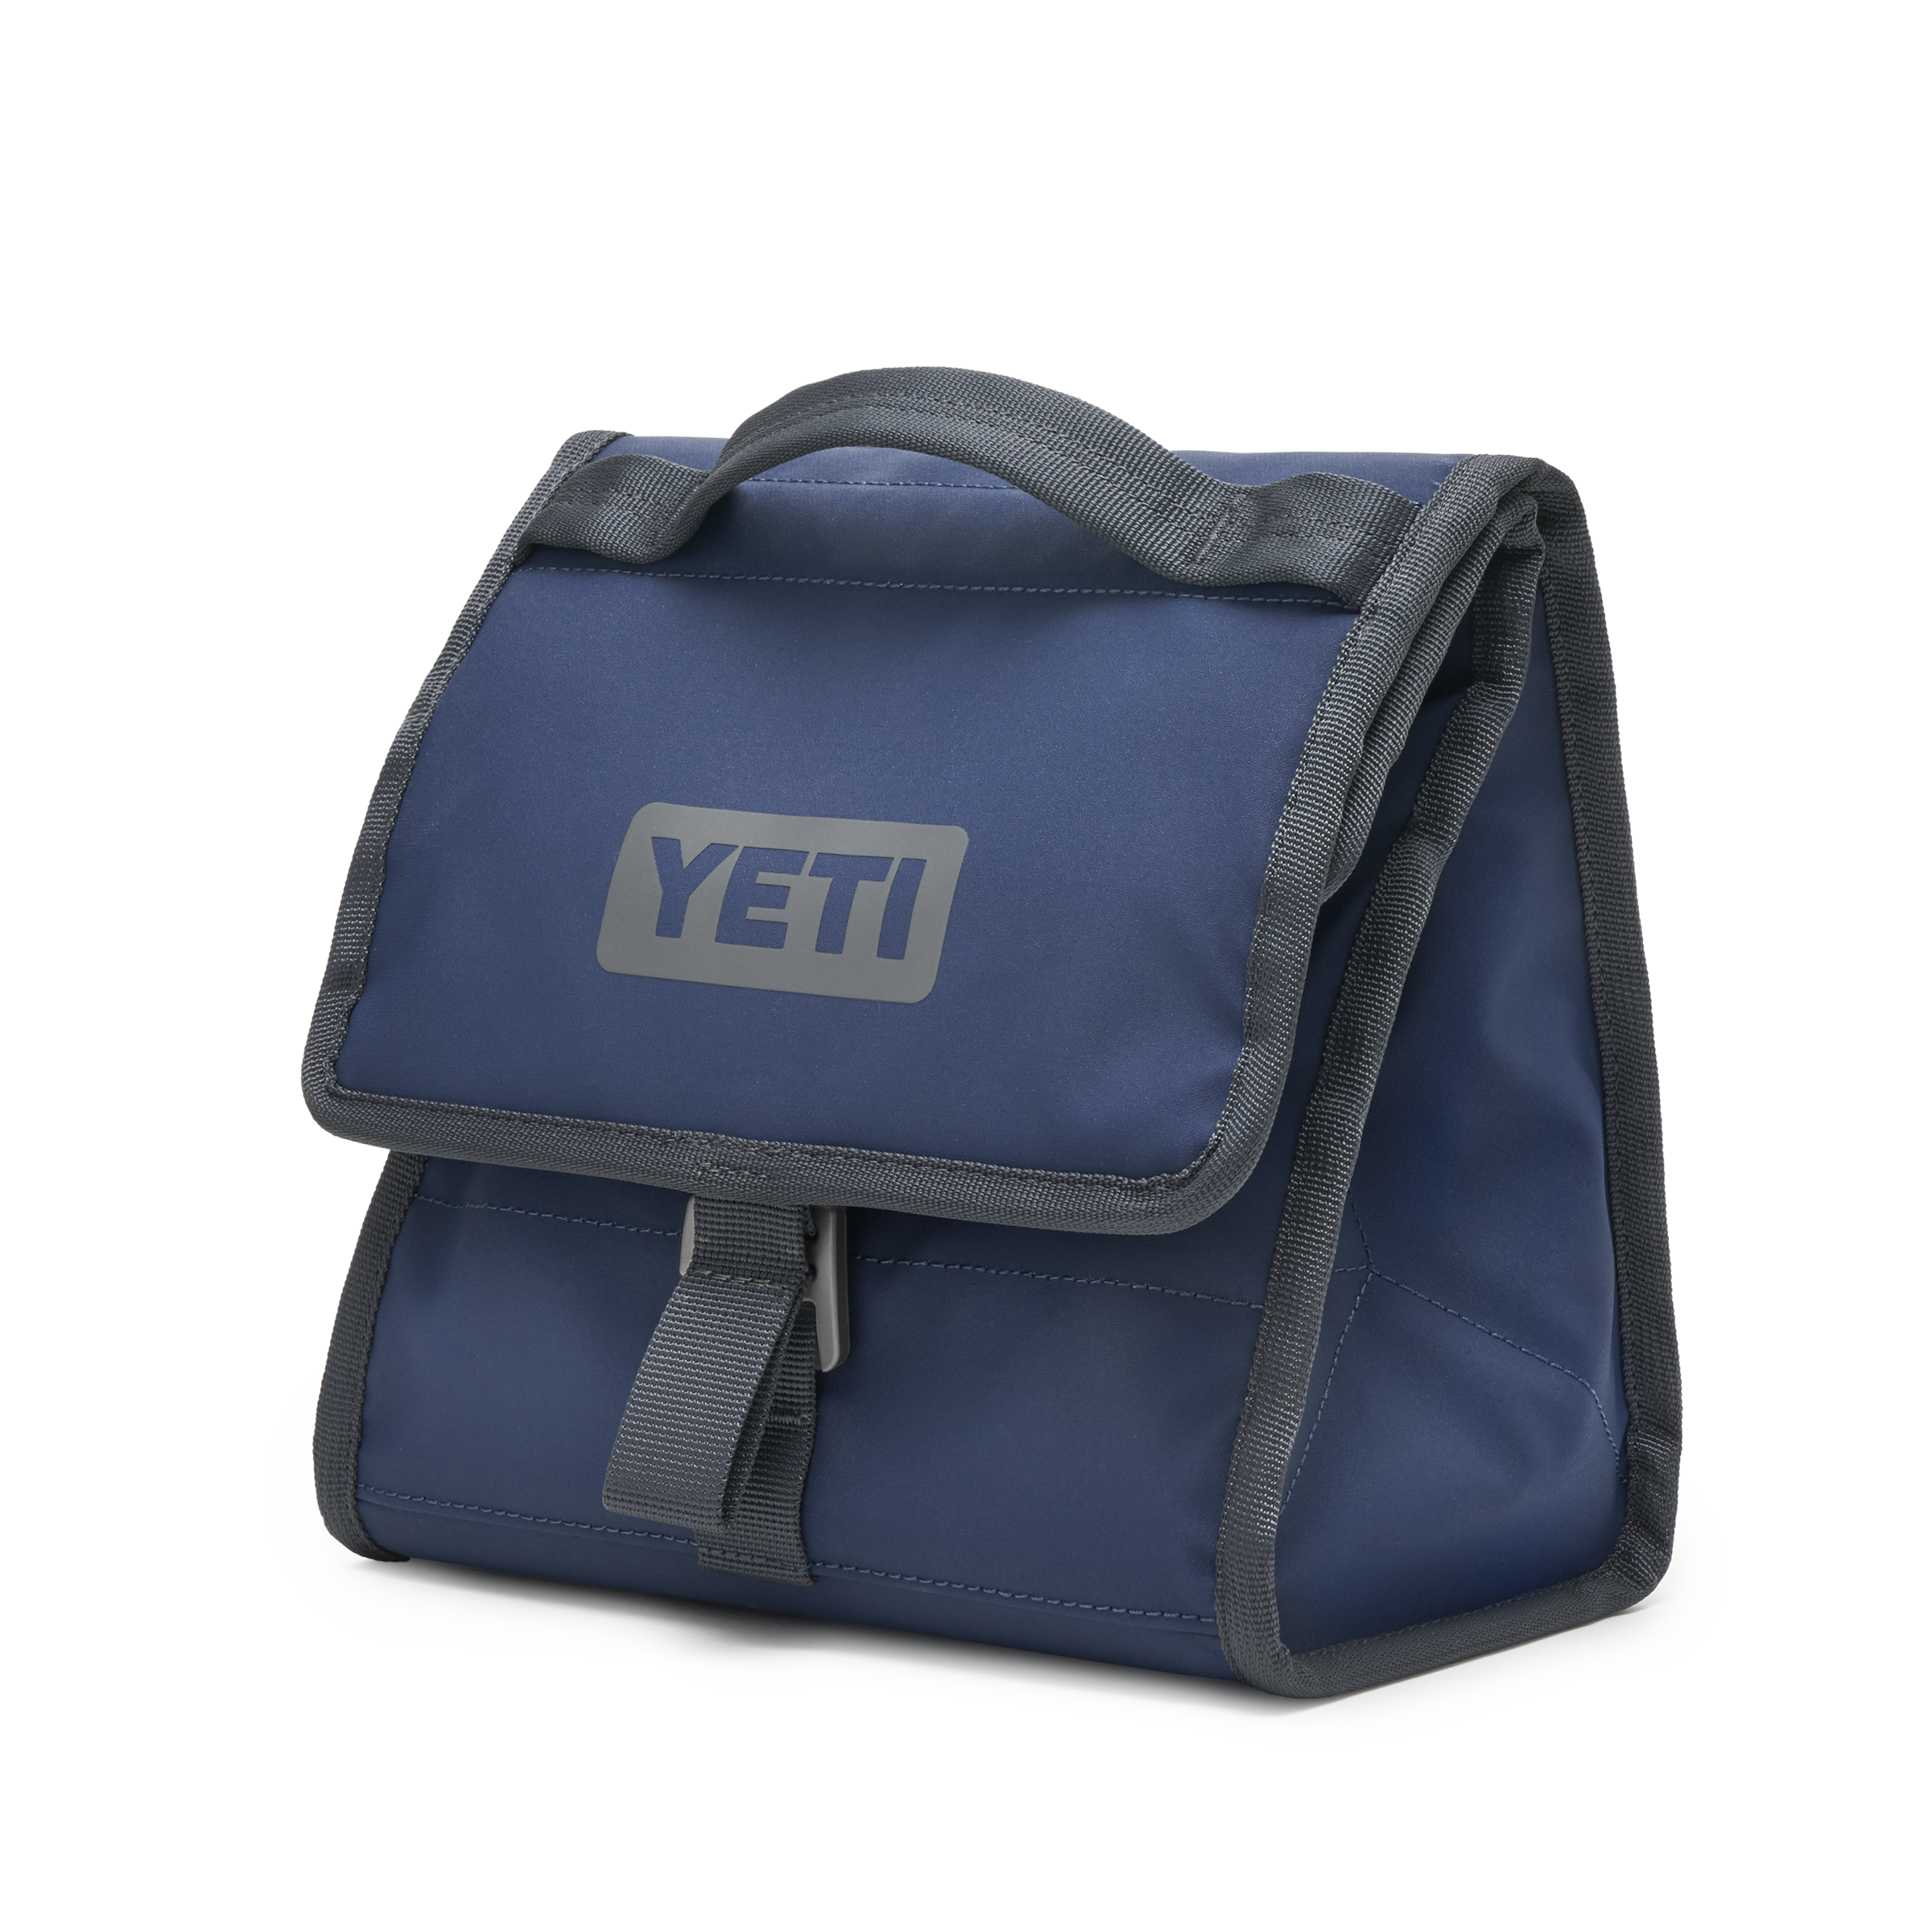 Yeti' Rambler 20 oz. Travel Mug - Rescue Red – Trav's Outfitter